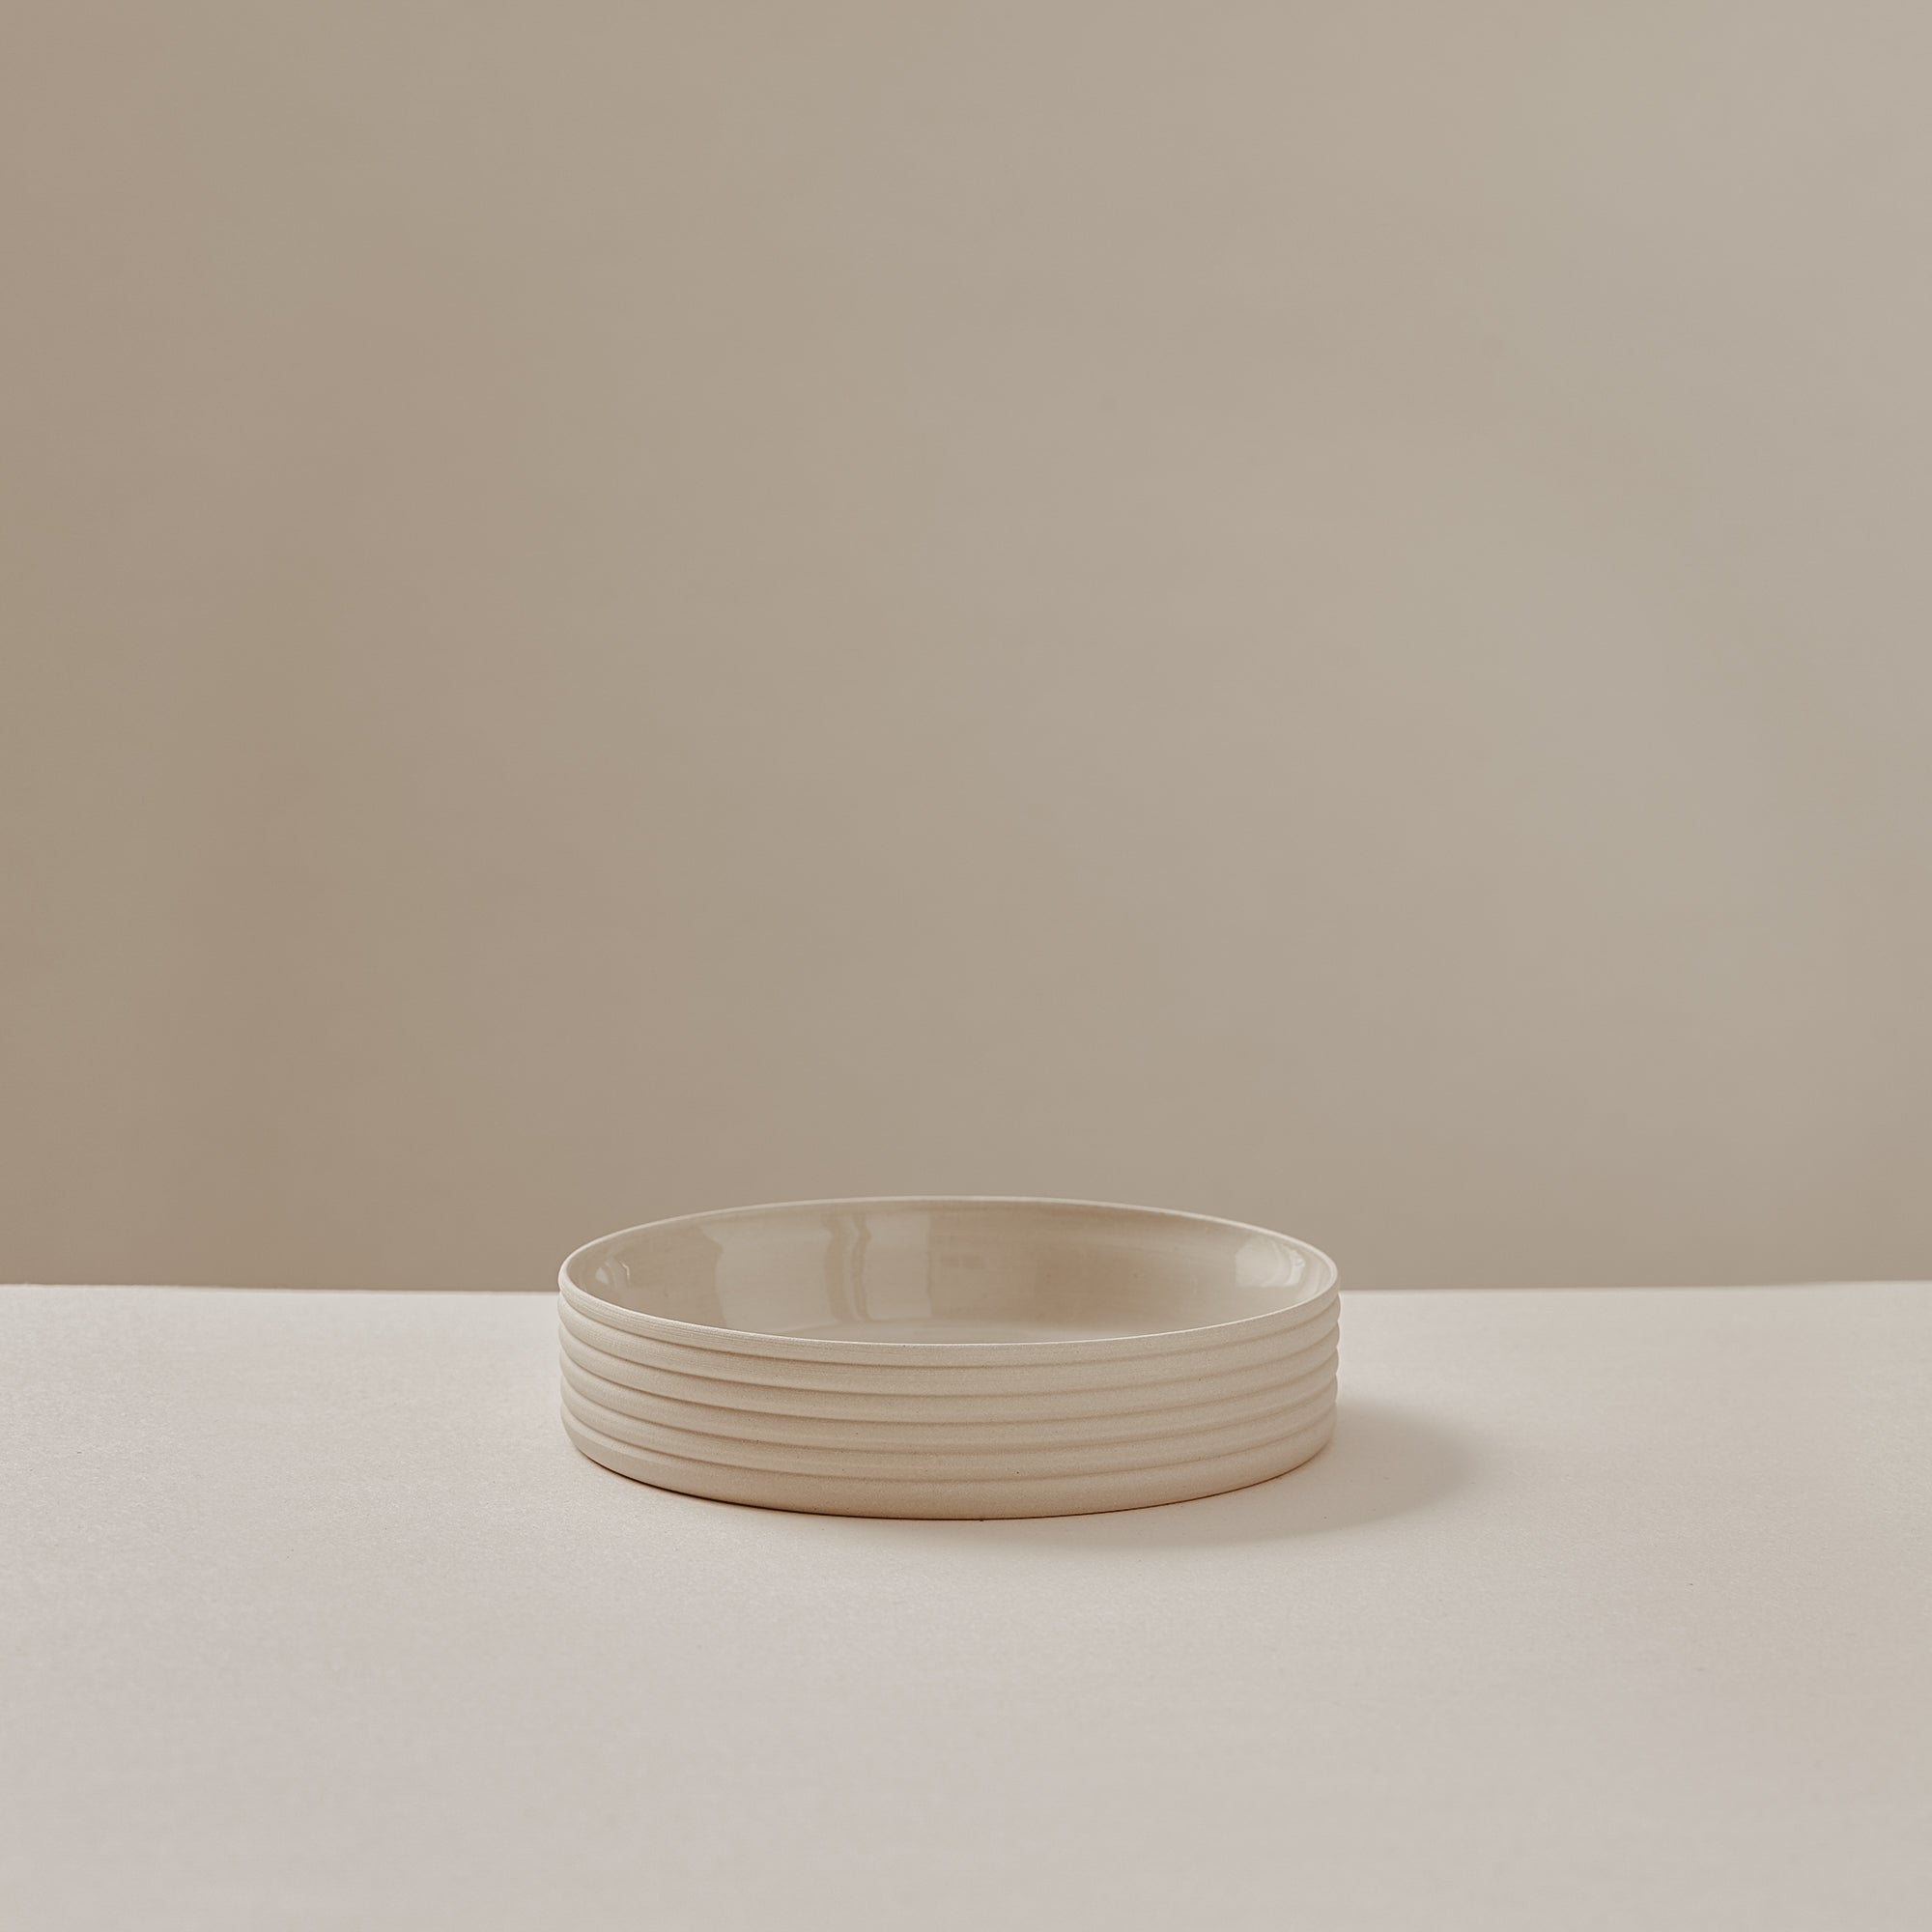 Tapas Schale handgemachte Keramik clai studio Berlin Prenzlauer Berg modern tableware